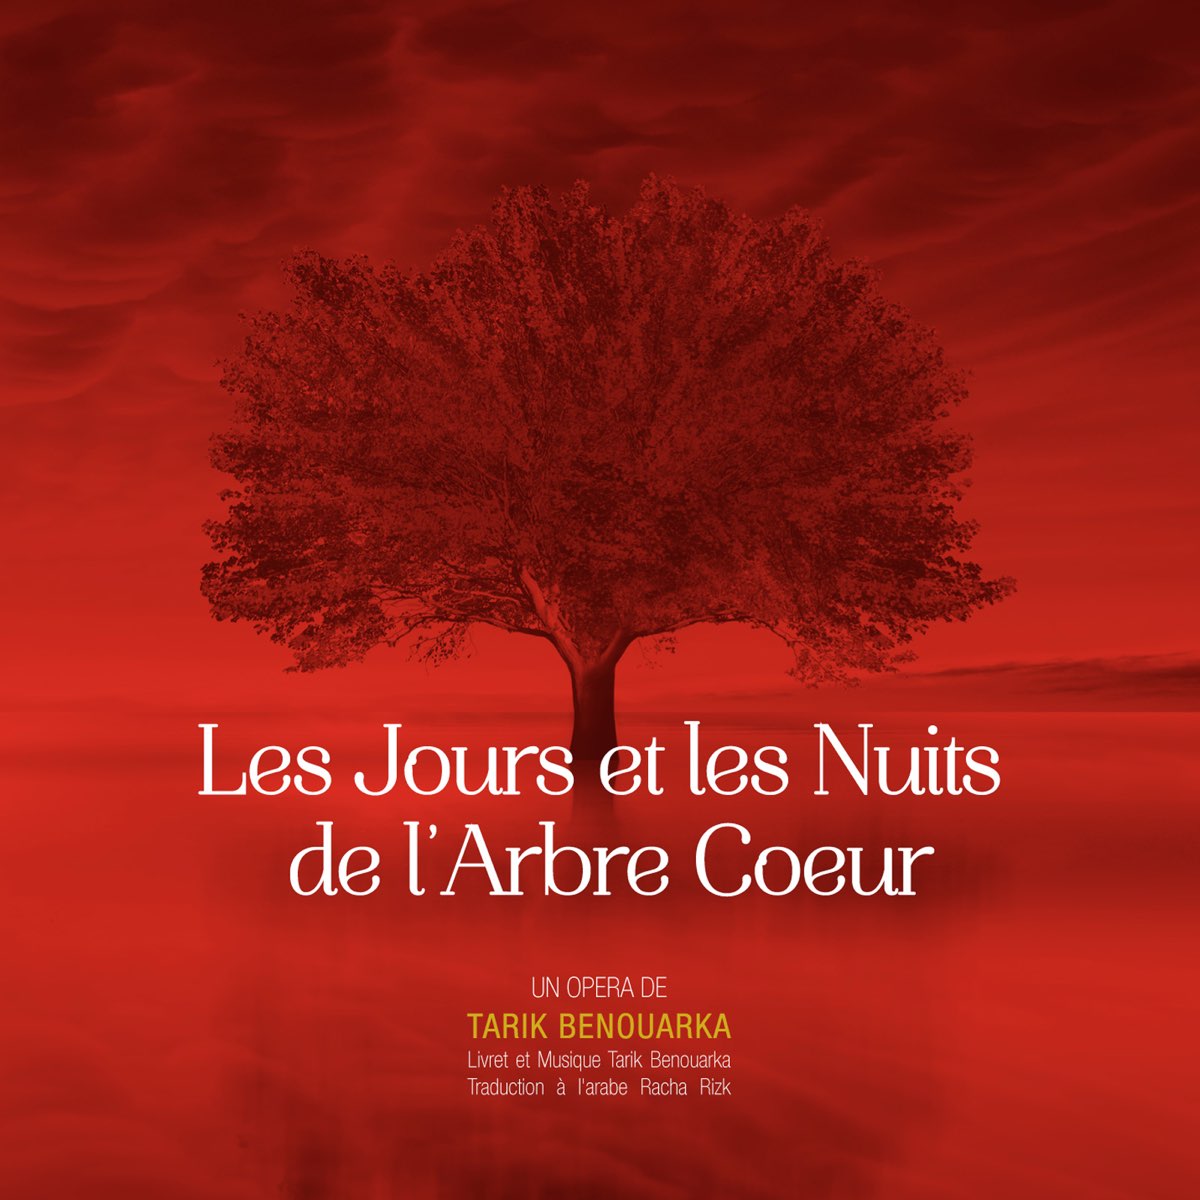 Les Jours Et Les Nuits De L Arbre Coeur Opera De Tarik Benouarka By Tarik Benouarka On Apple Music